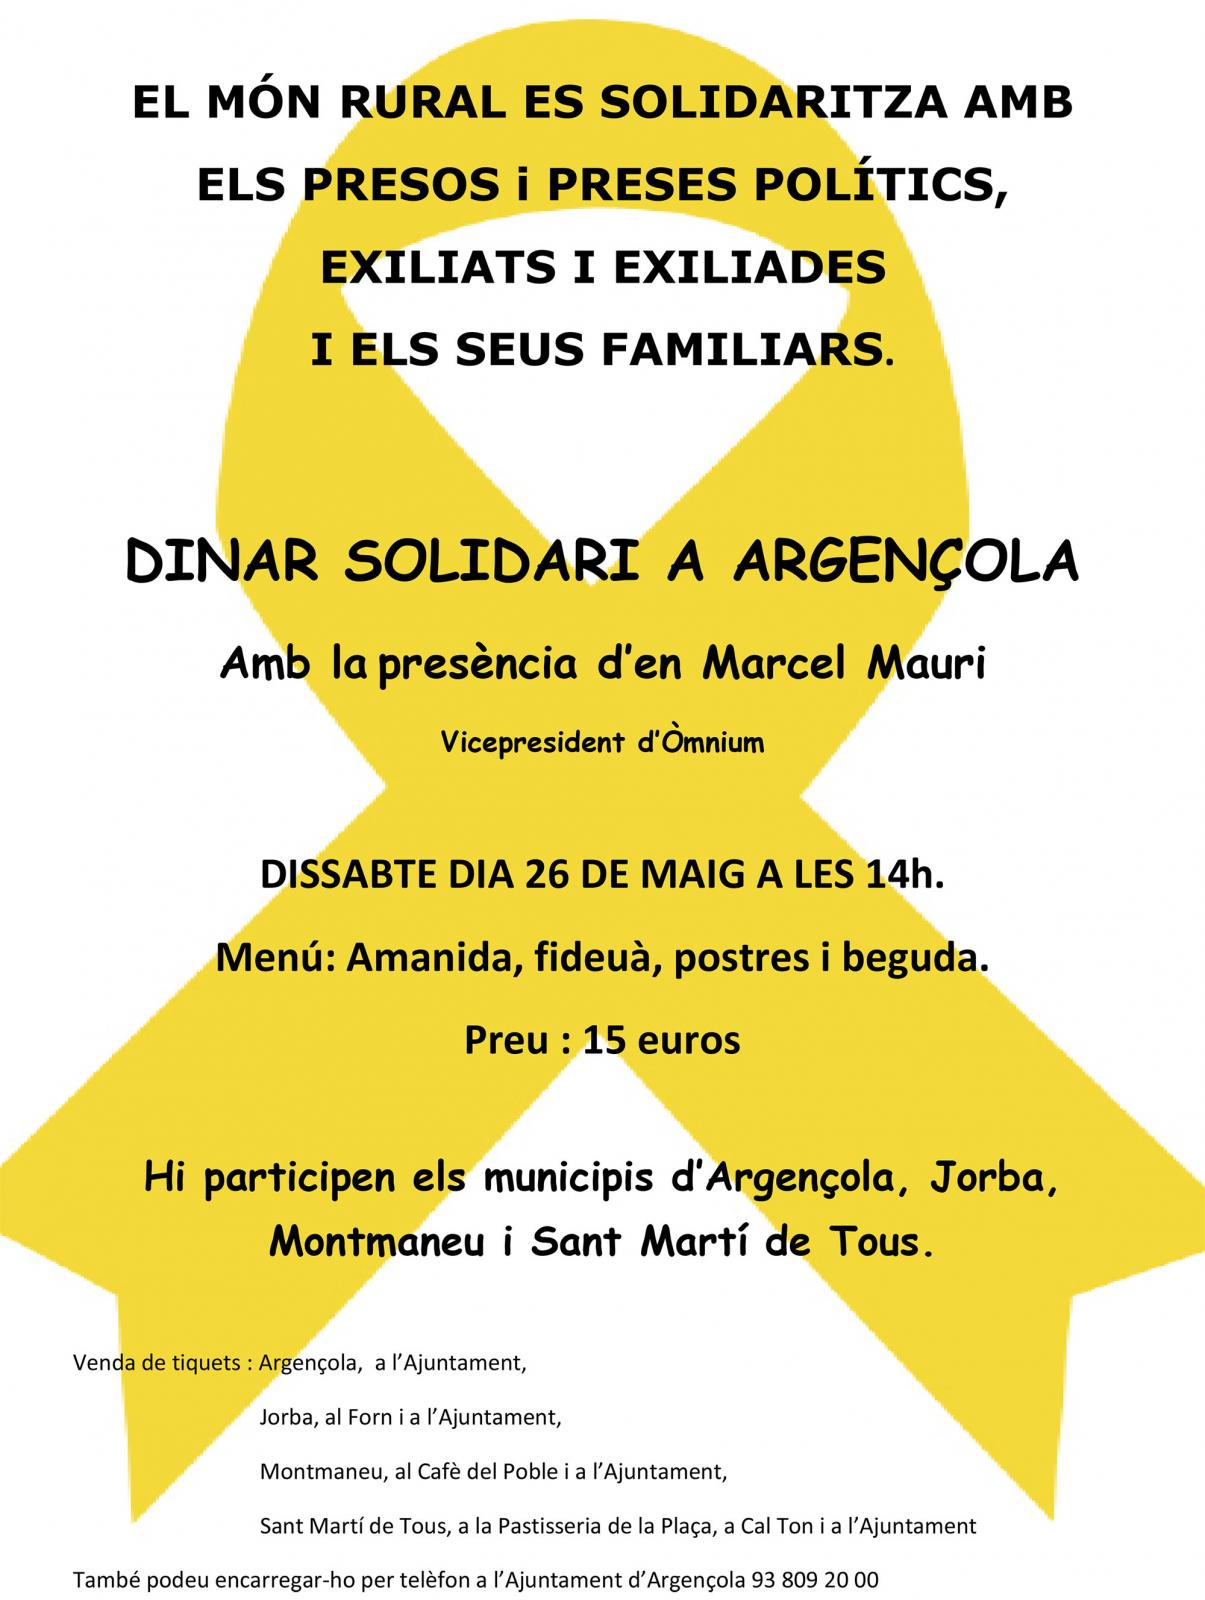 Dinar solidari d'Argençola, Jorba, Montmaneu i Sant Martí de Tous